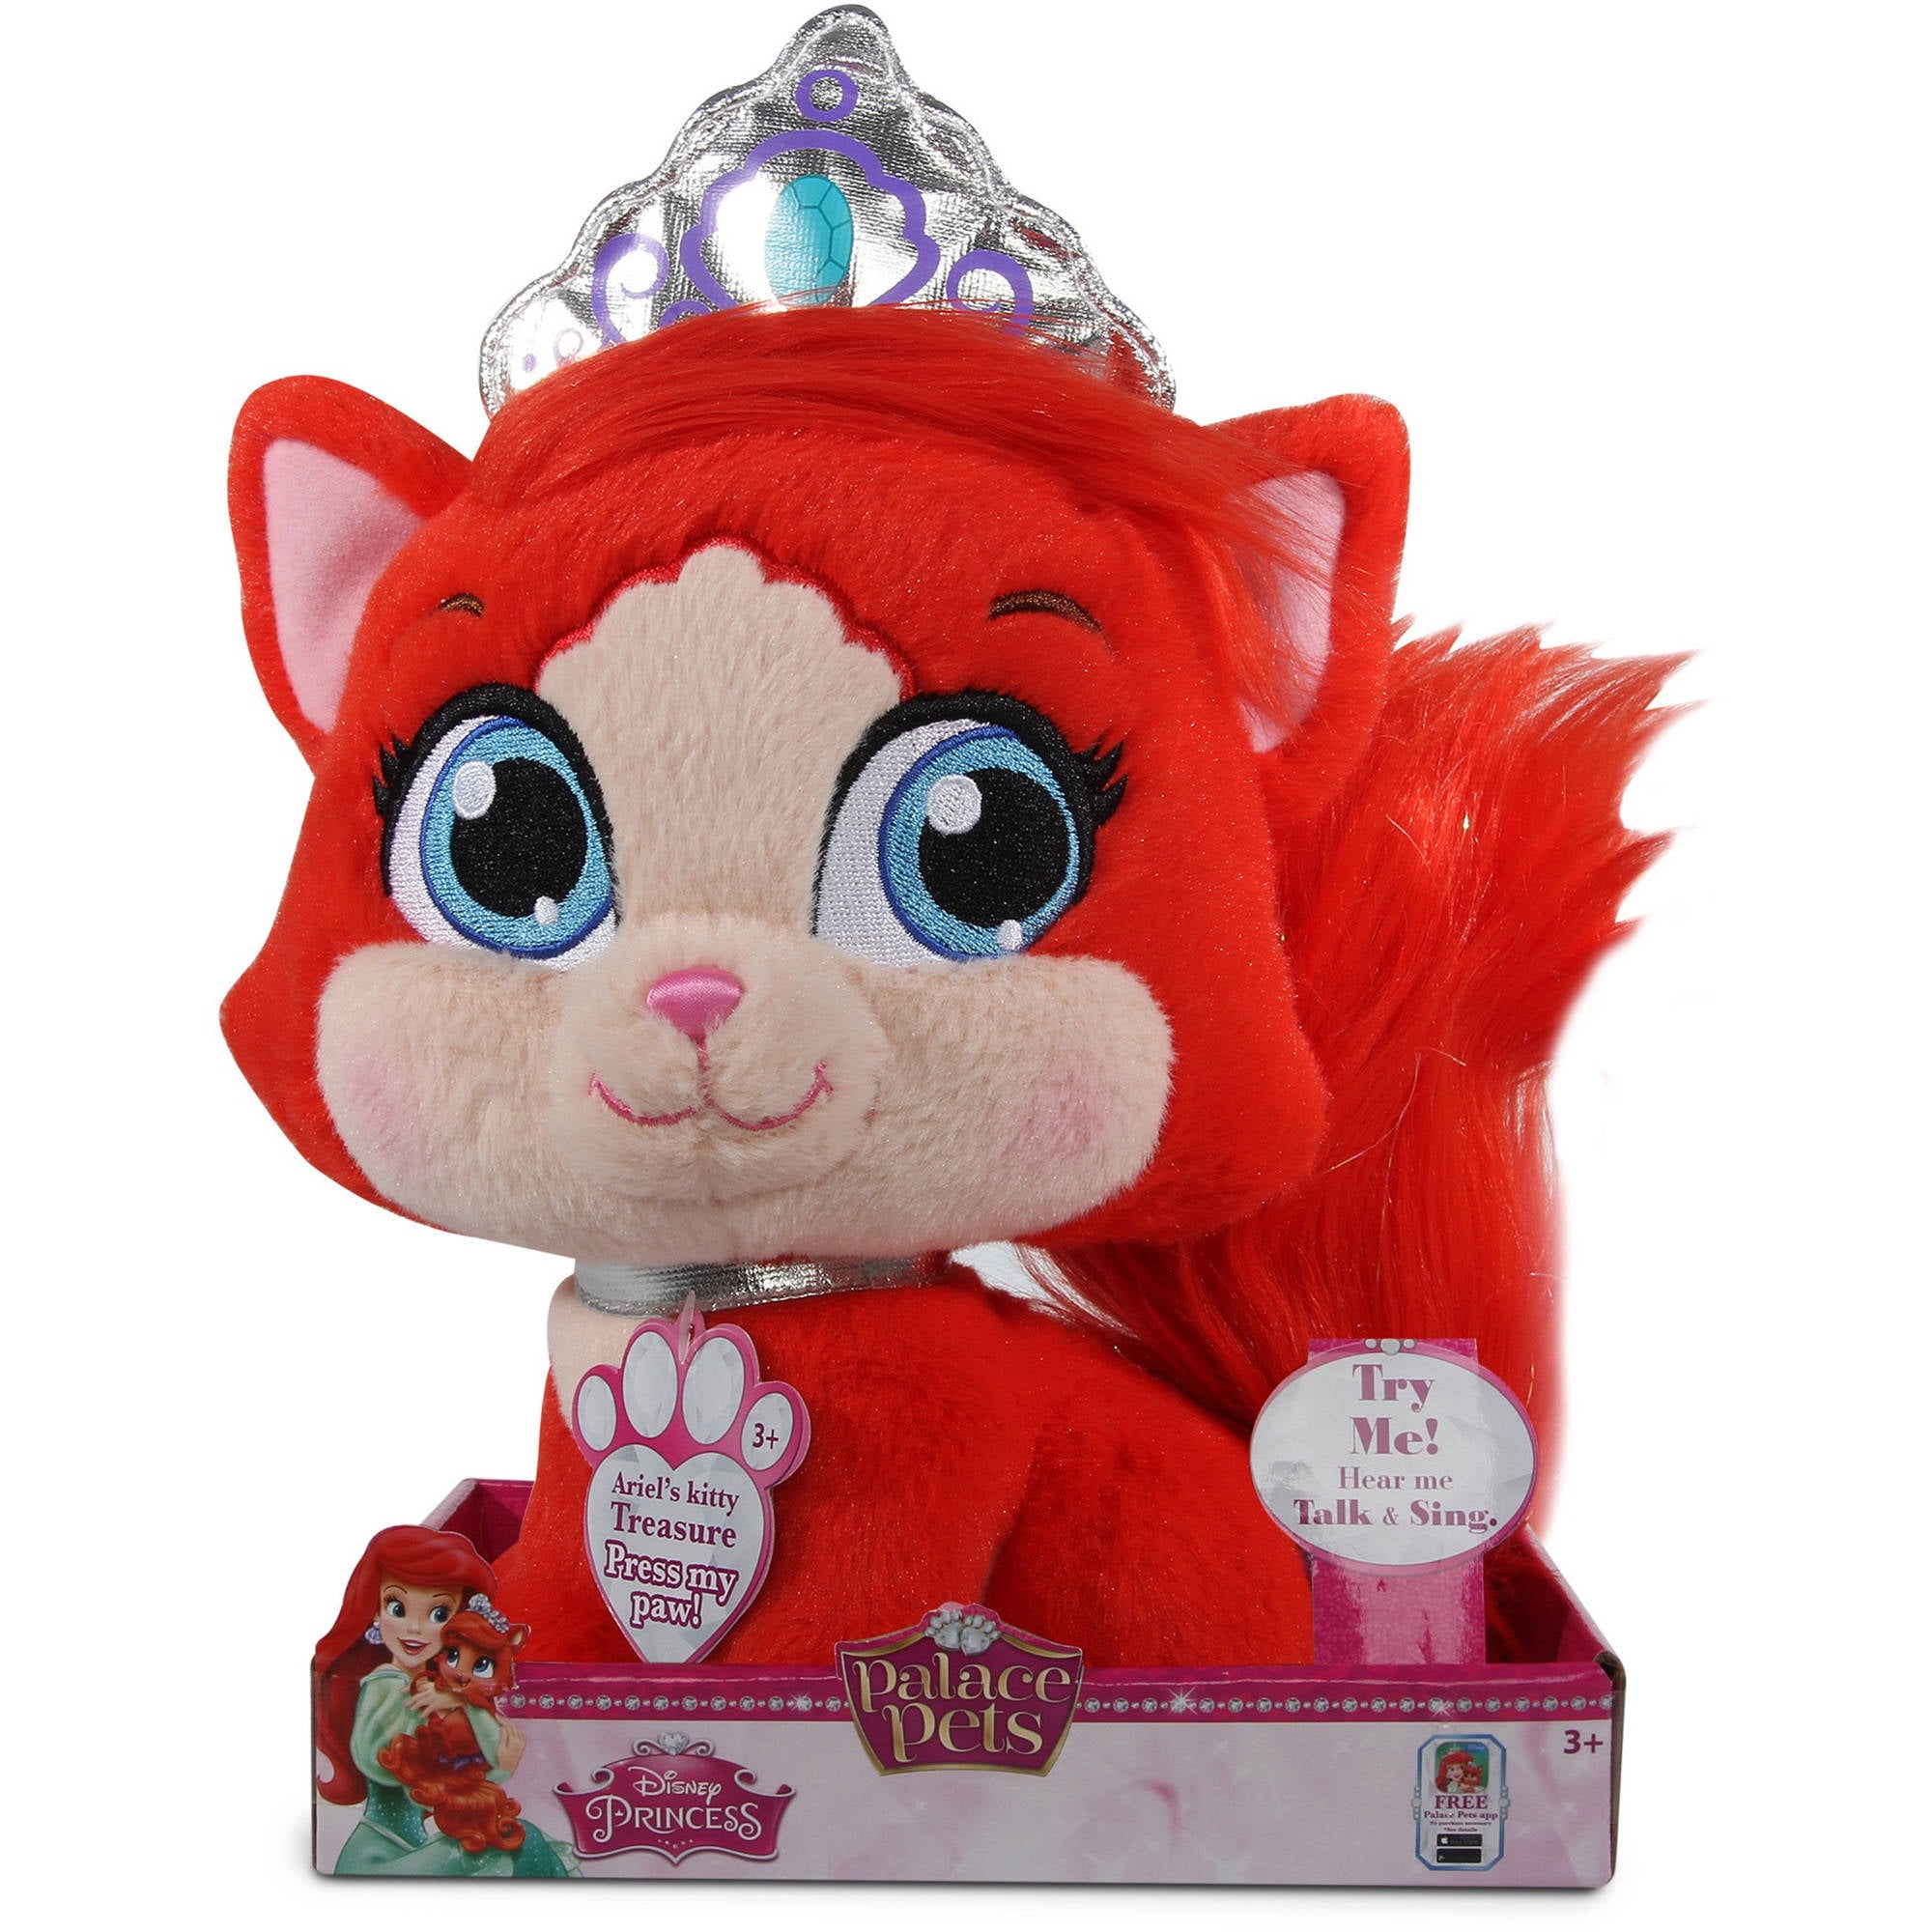 Disney Princess Palace Pets Ariels Kitty Treasure Large Plush Toy